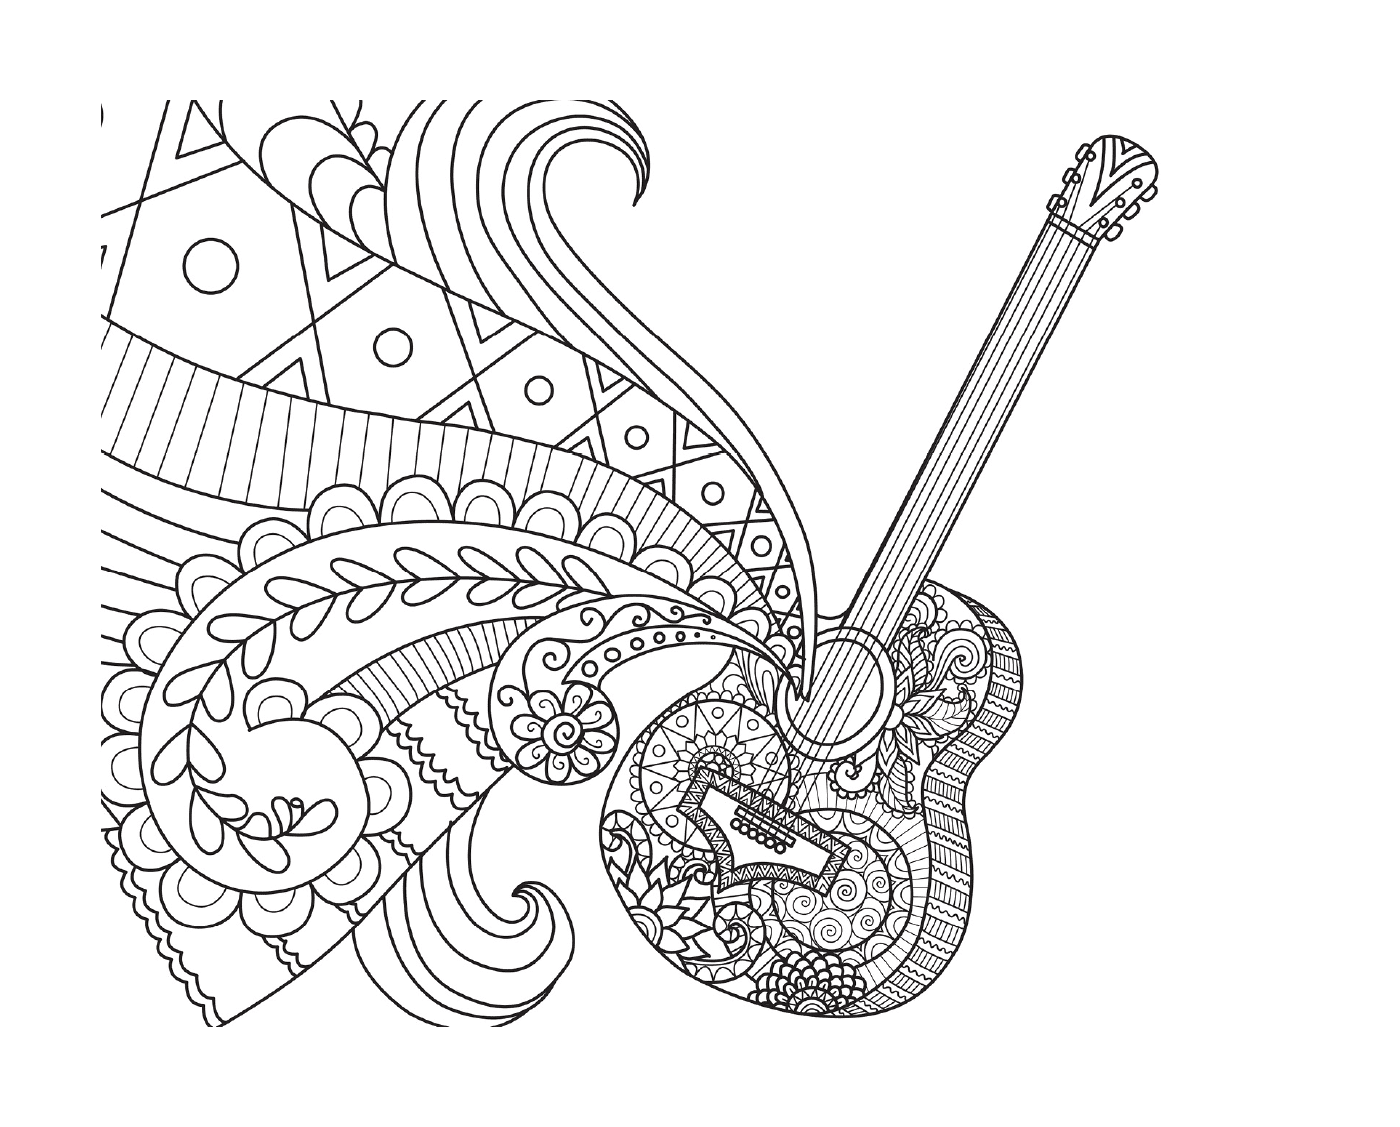  Coco Guitar von Bimbimkha 